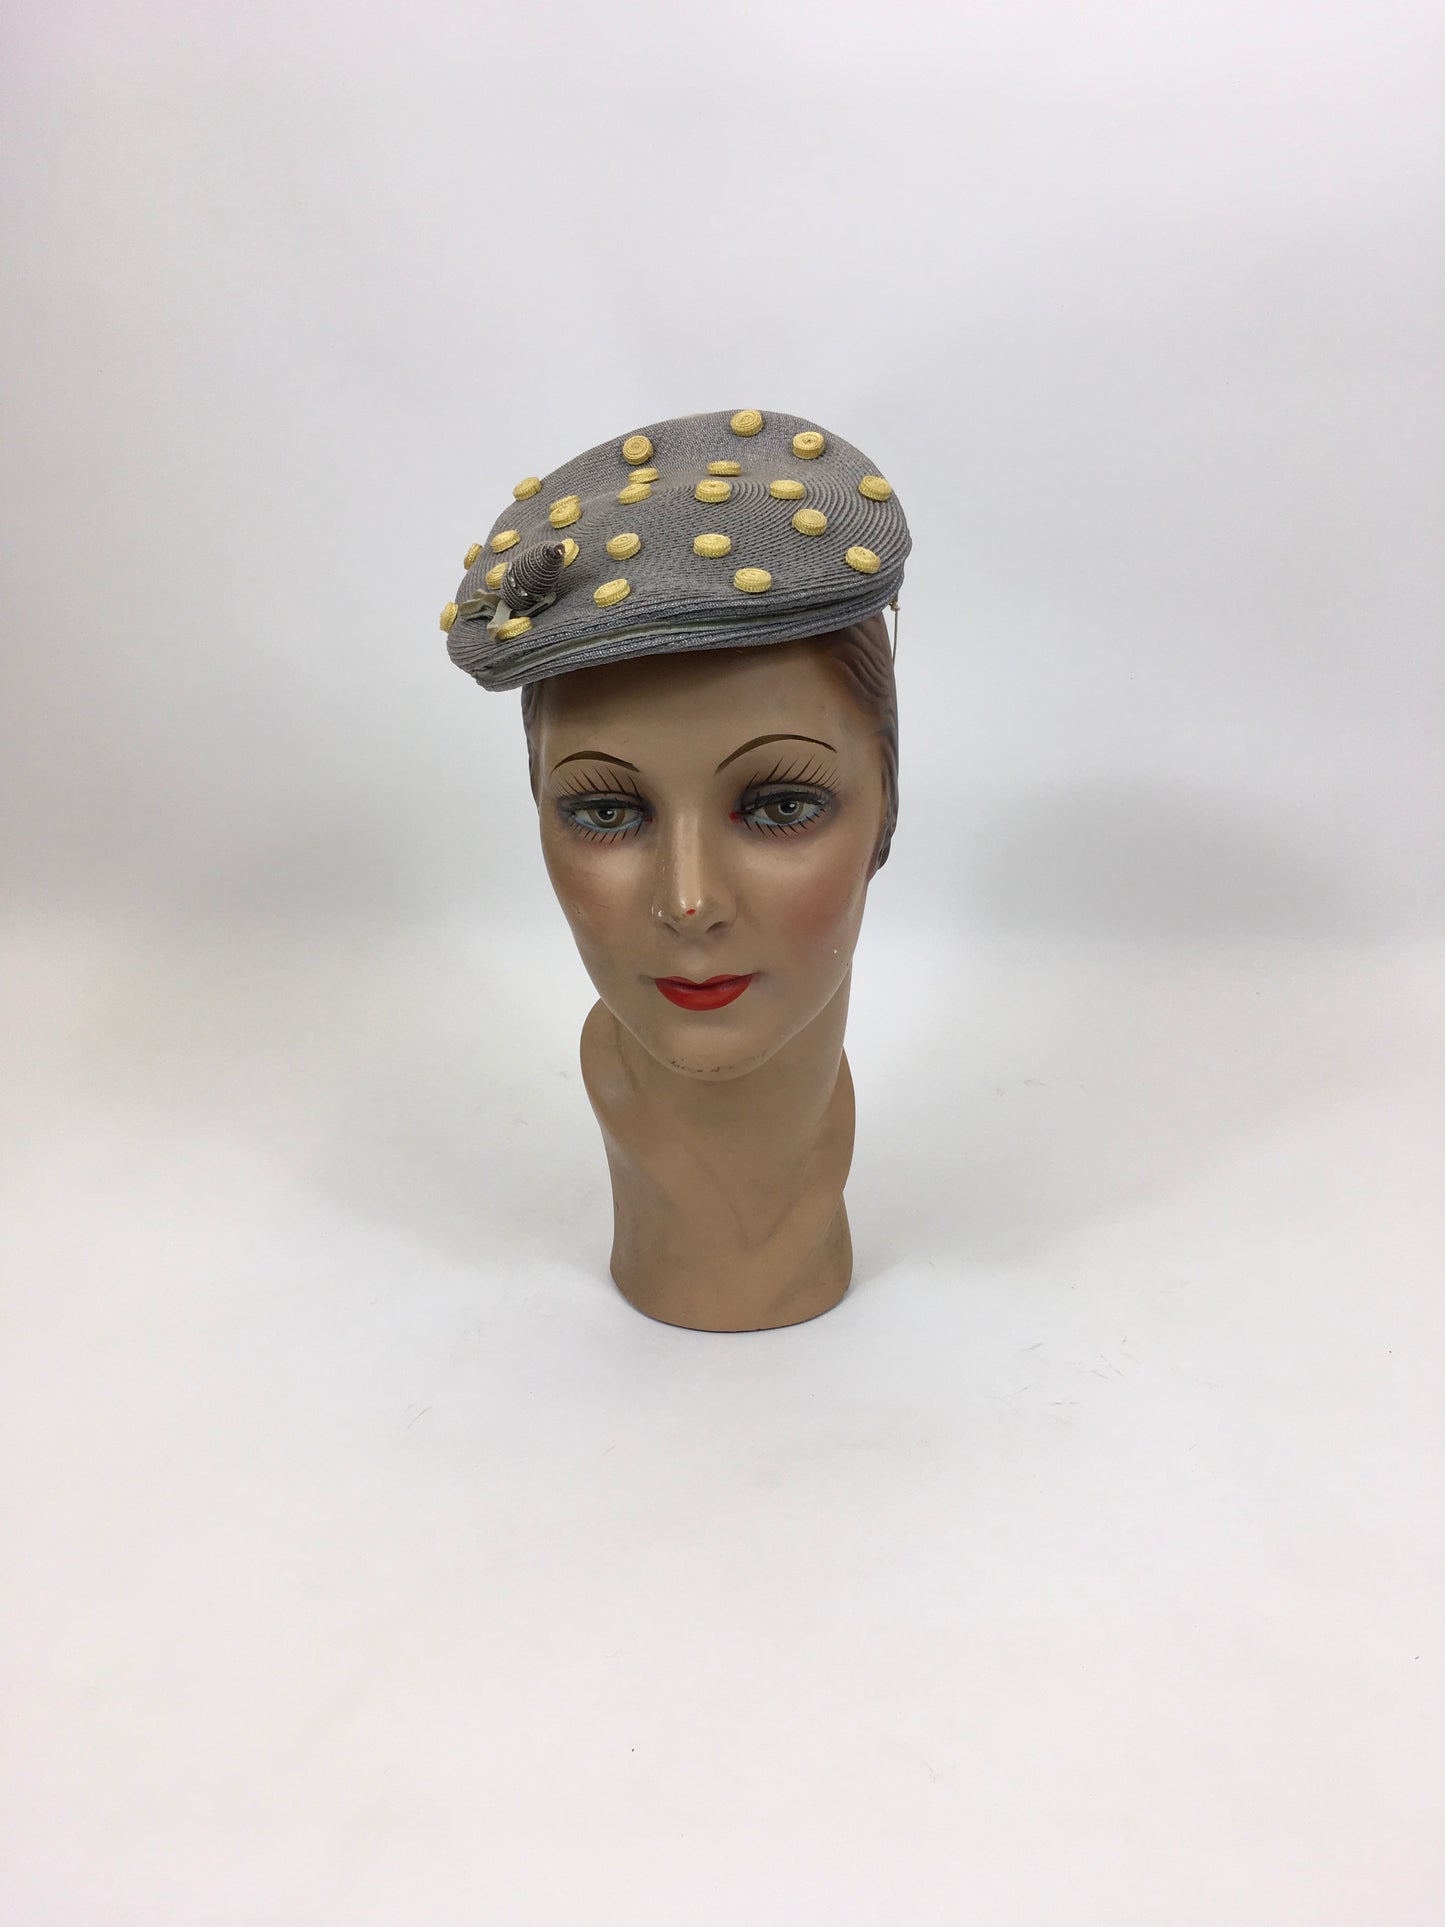 Original Late 1940's Stunning Headpiece - In Powder Grey & Primrose Yellow Polka Dots